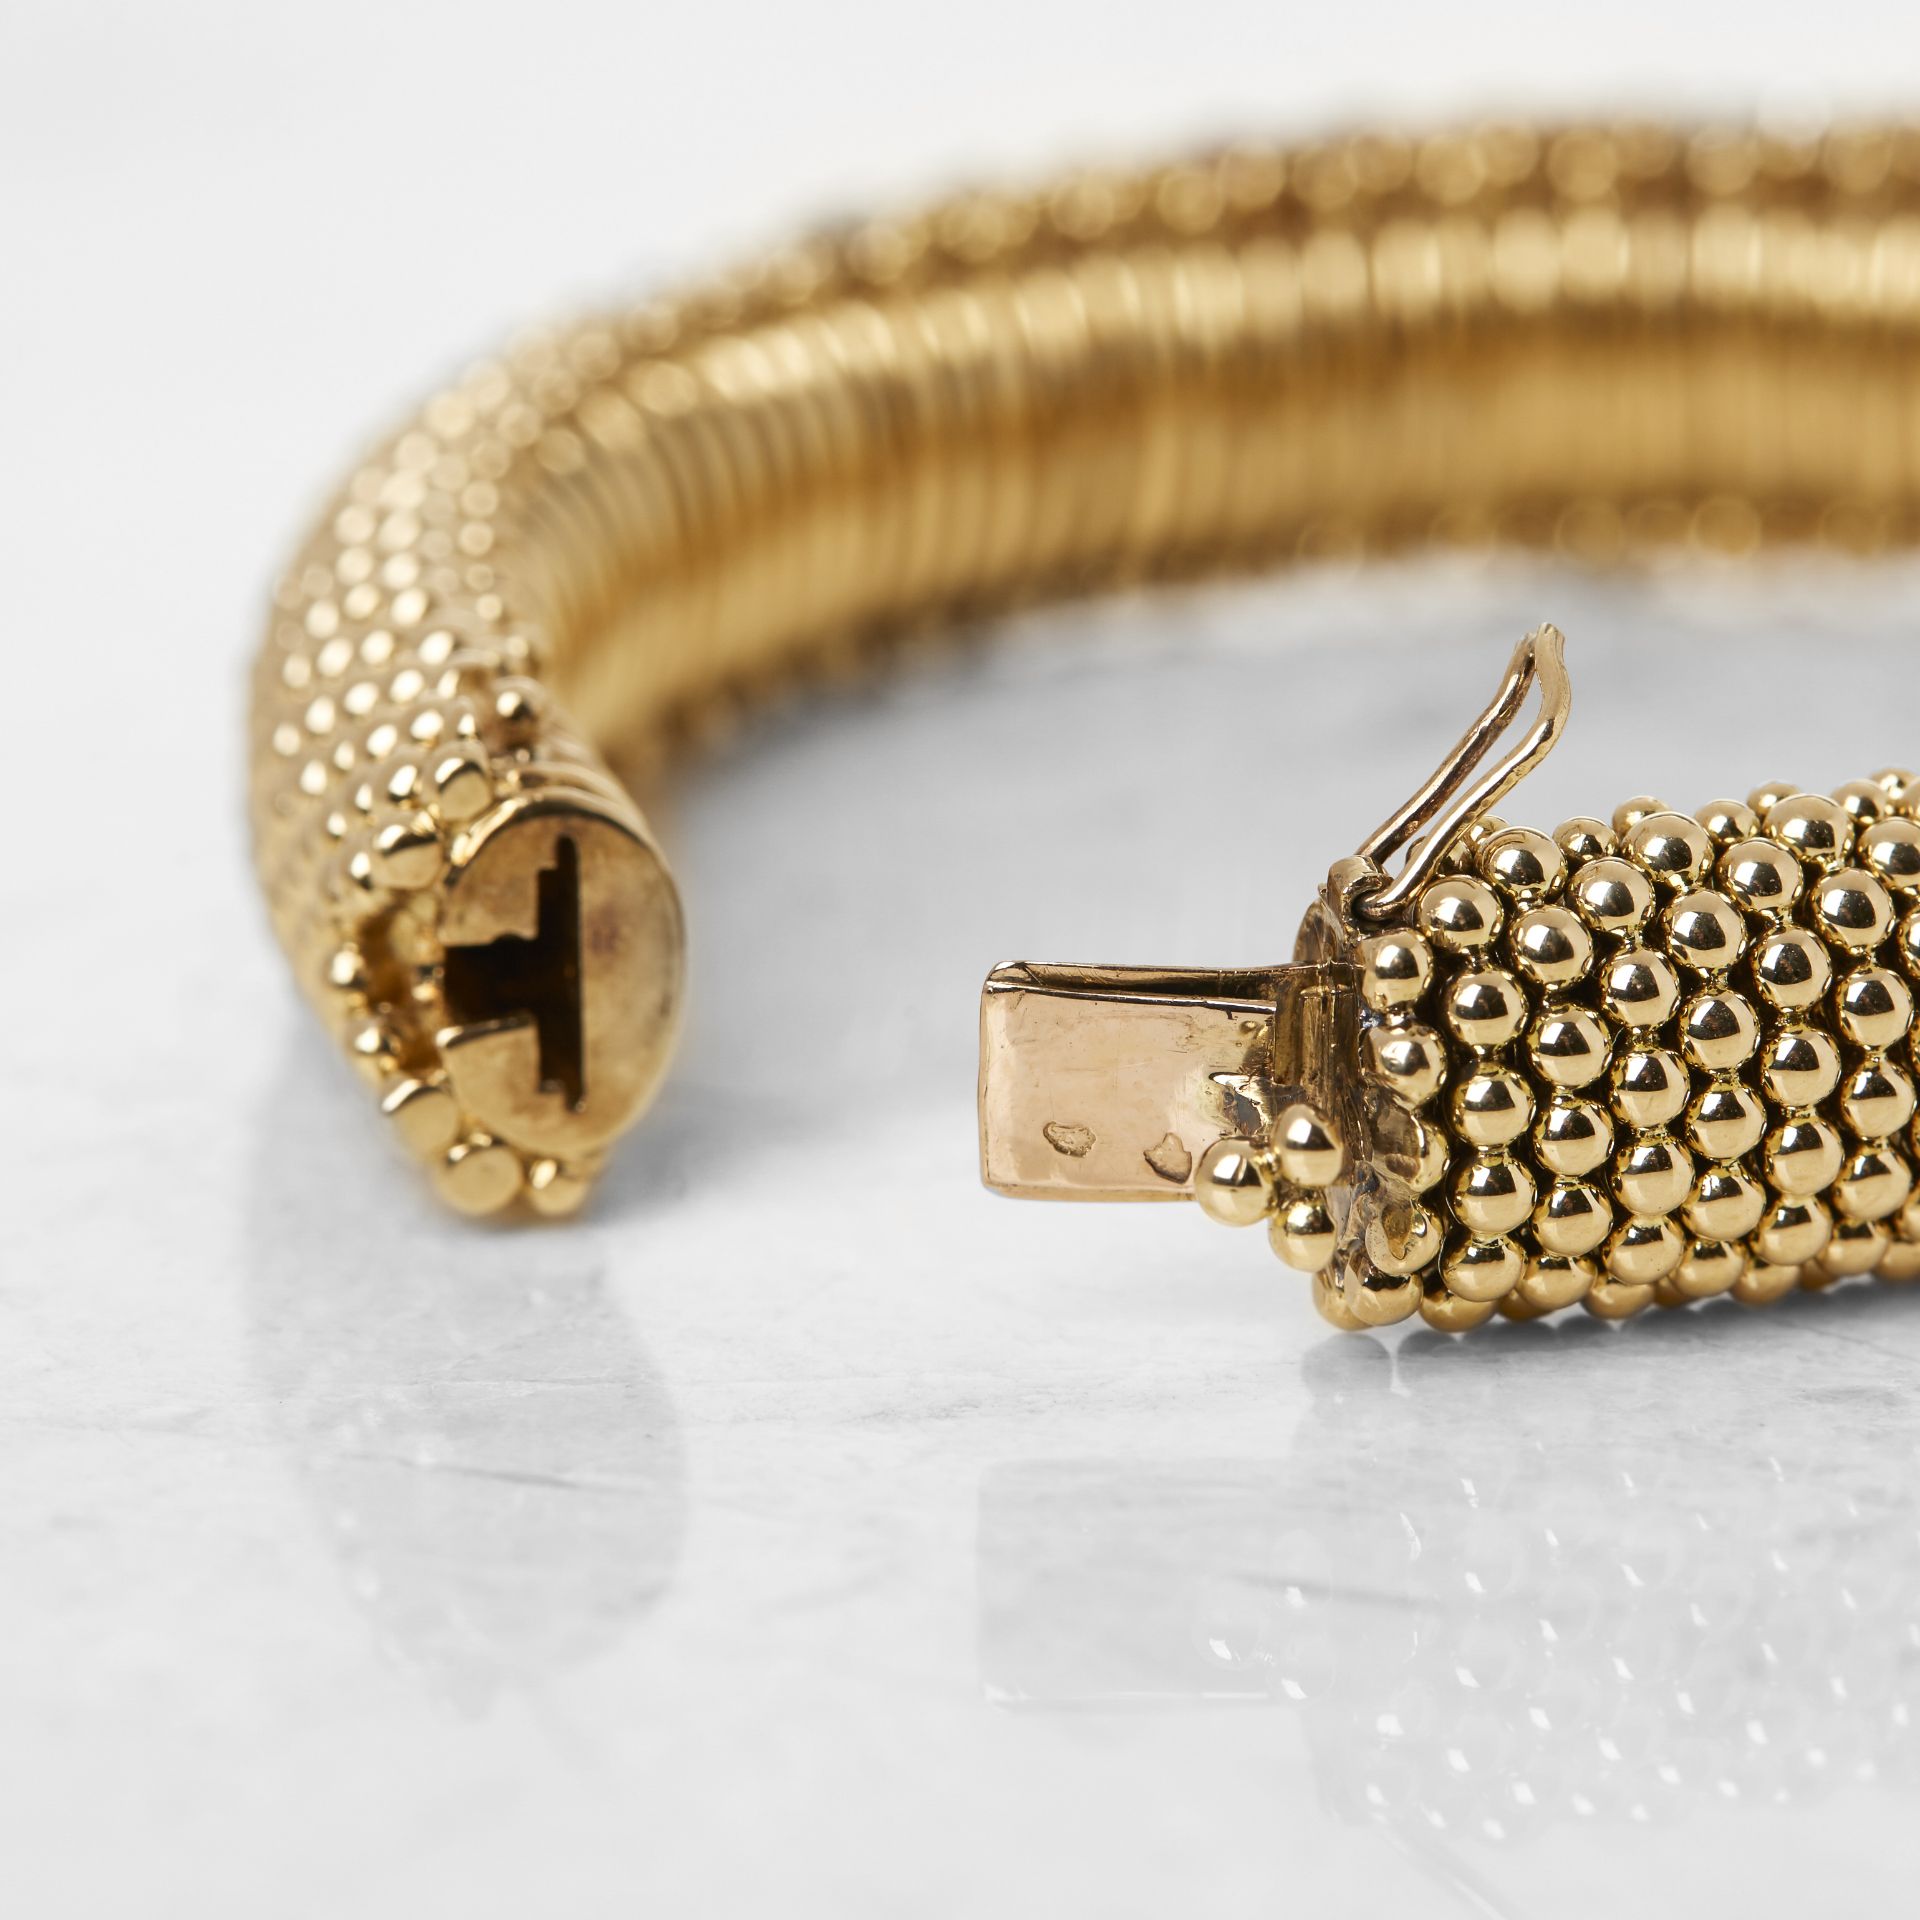 Van Cleef & Arpels 18k Yellow Gold Ruby & Diamond Vintage Bracelet with Presentation Box - Image 12 of 16